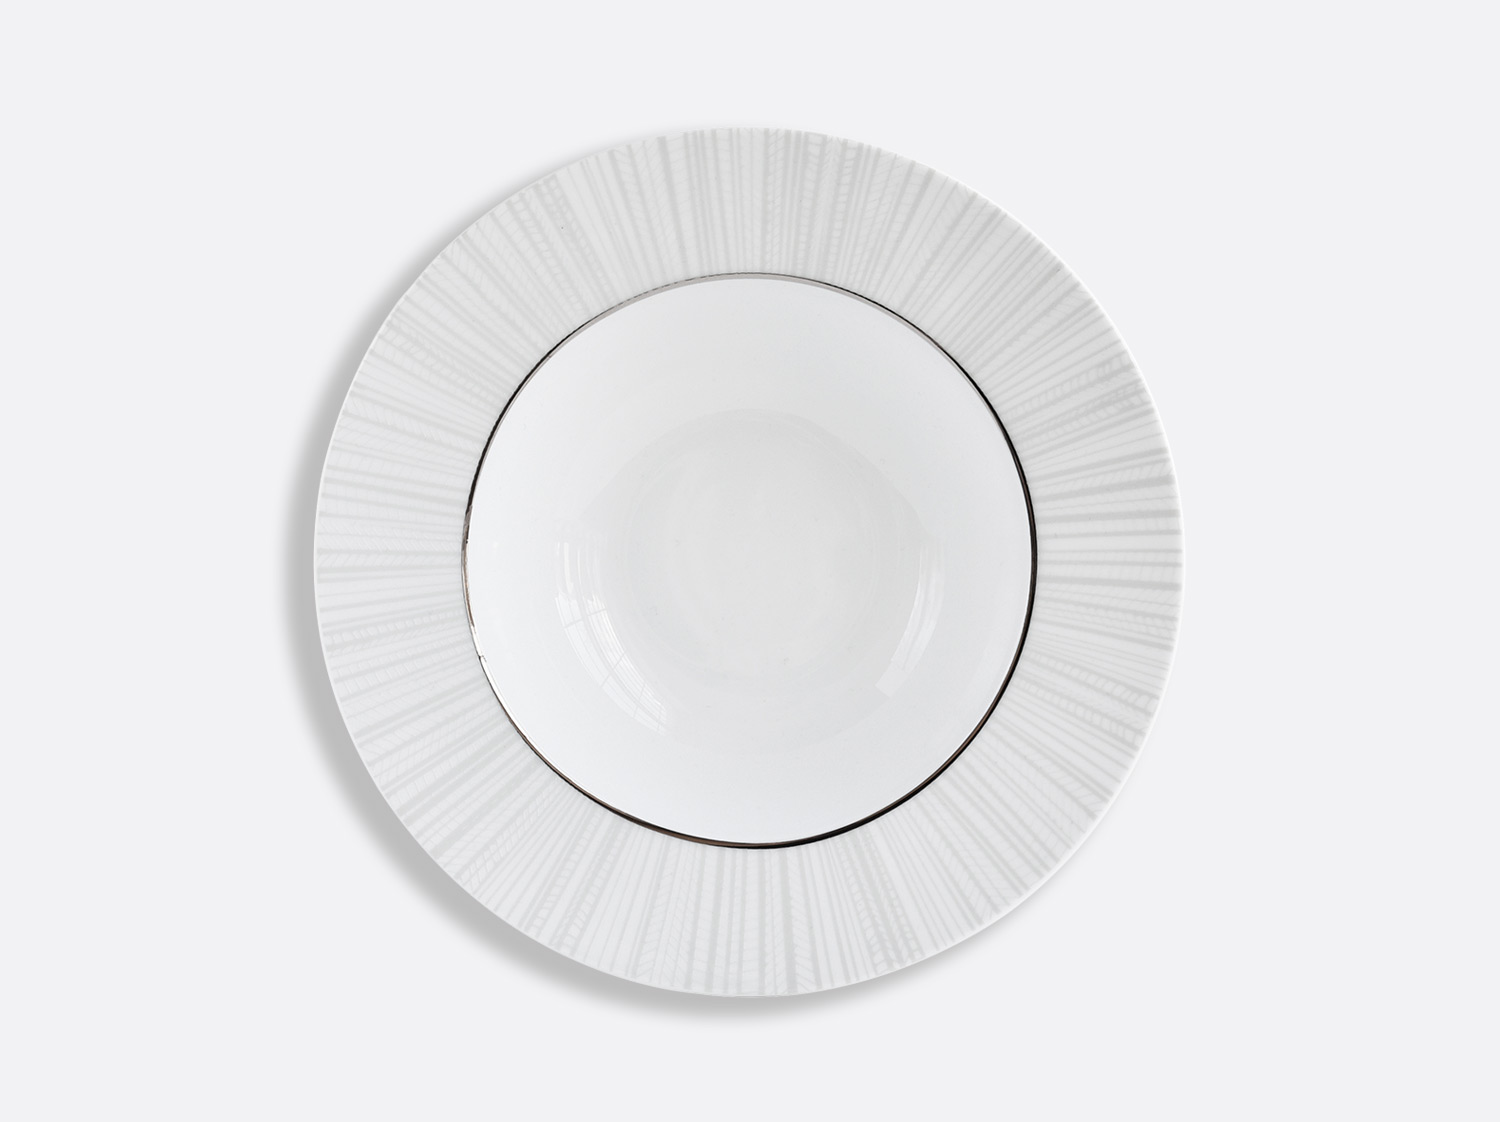 China Rim soup plate of the collection Silva | Bernardaud